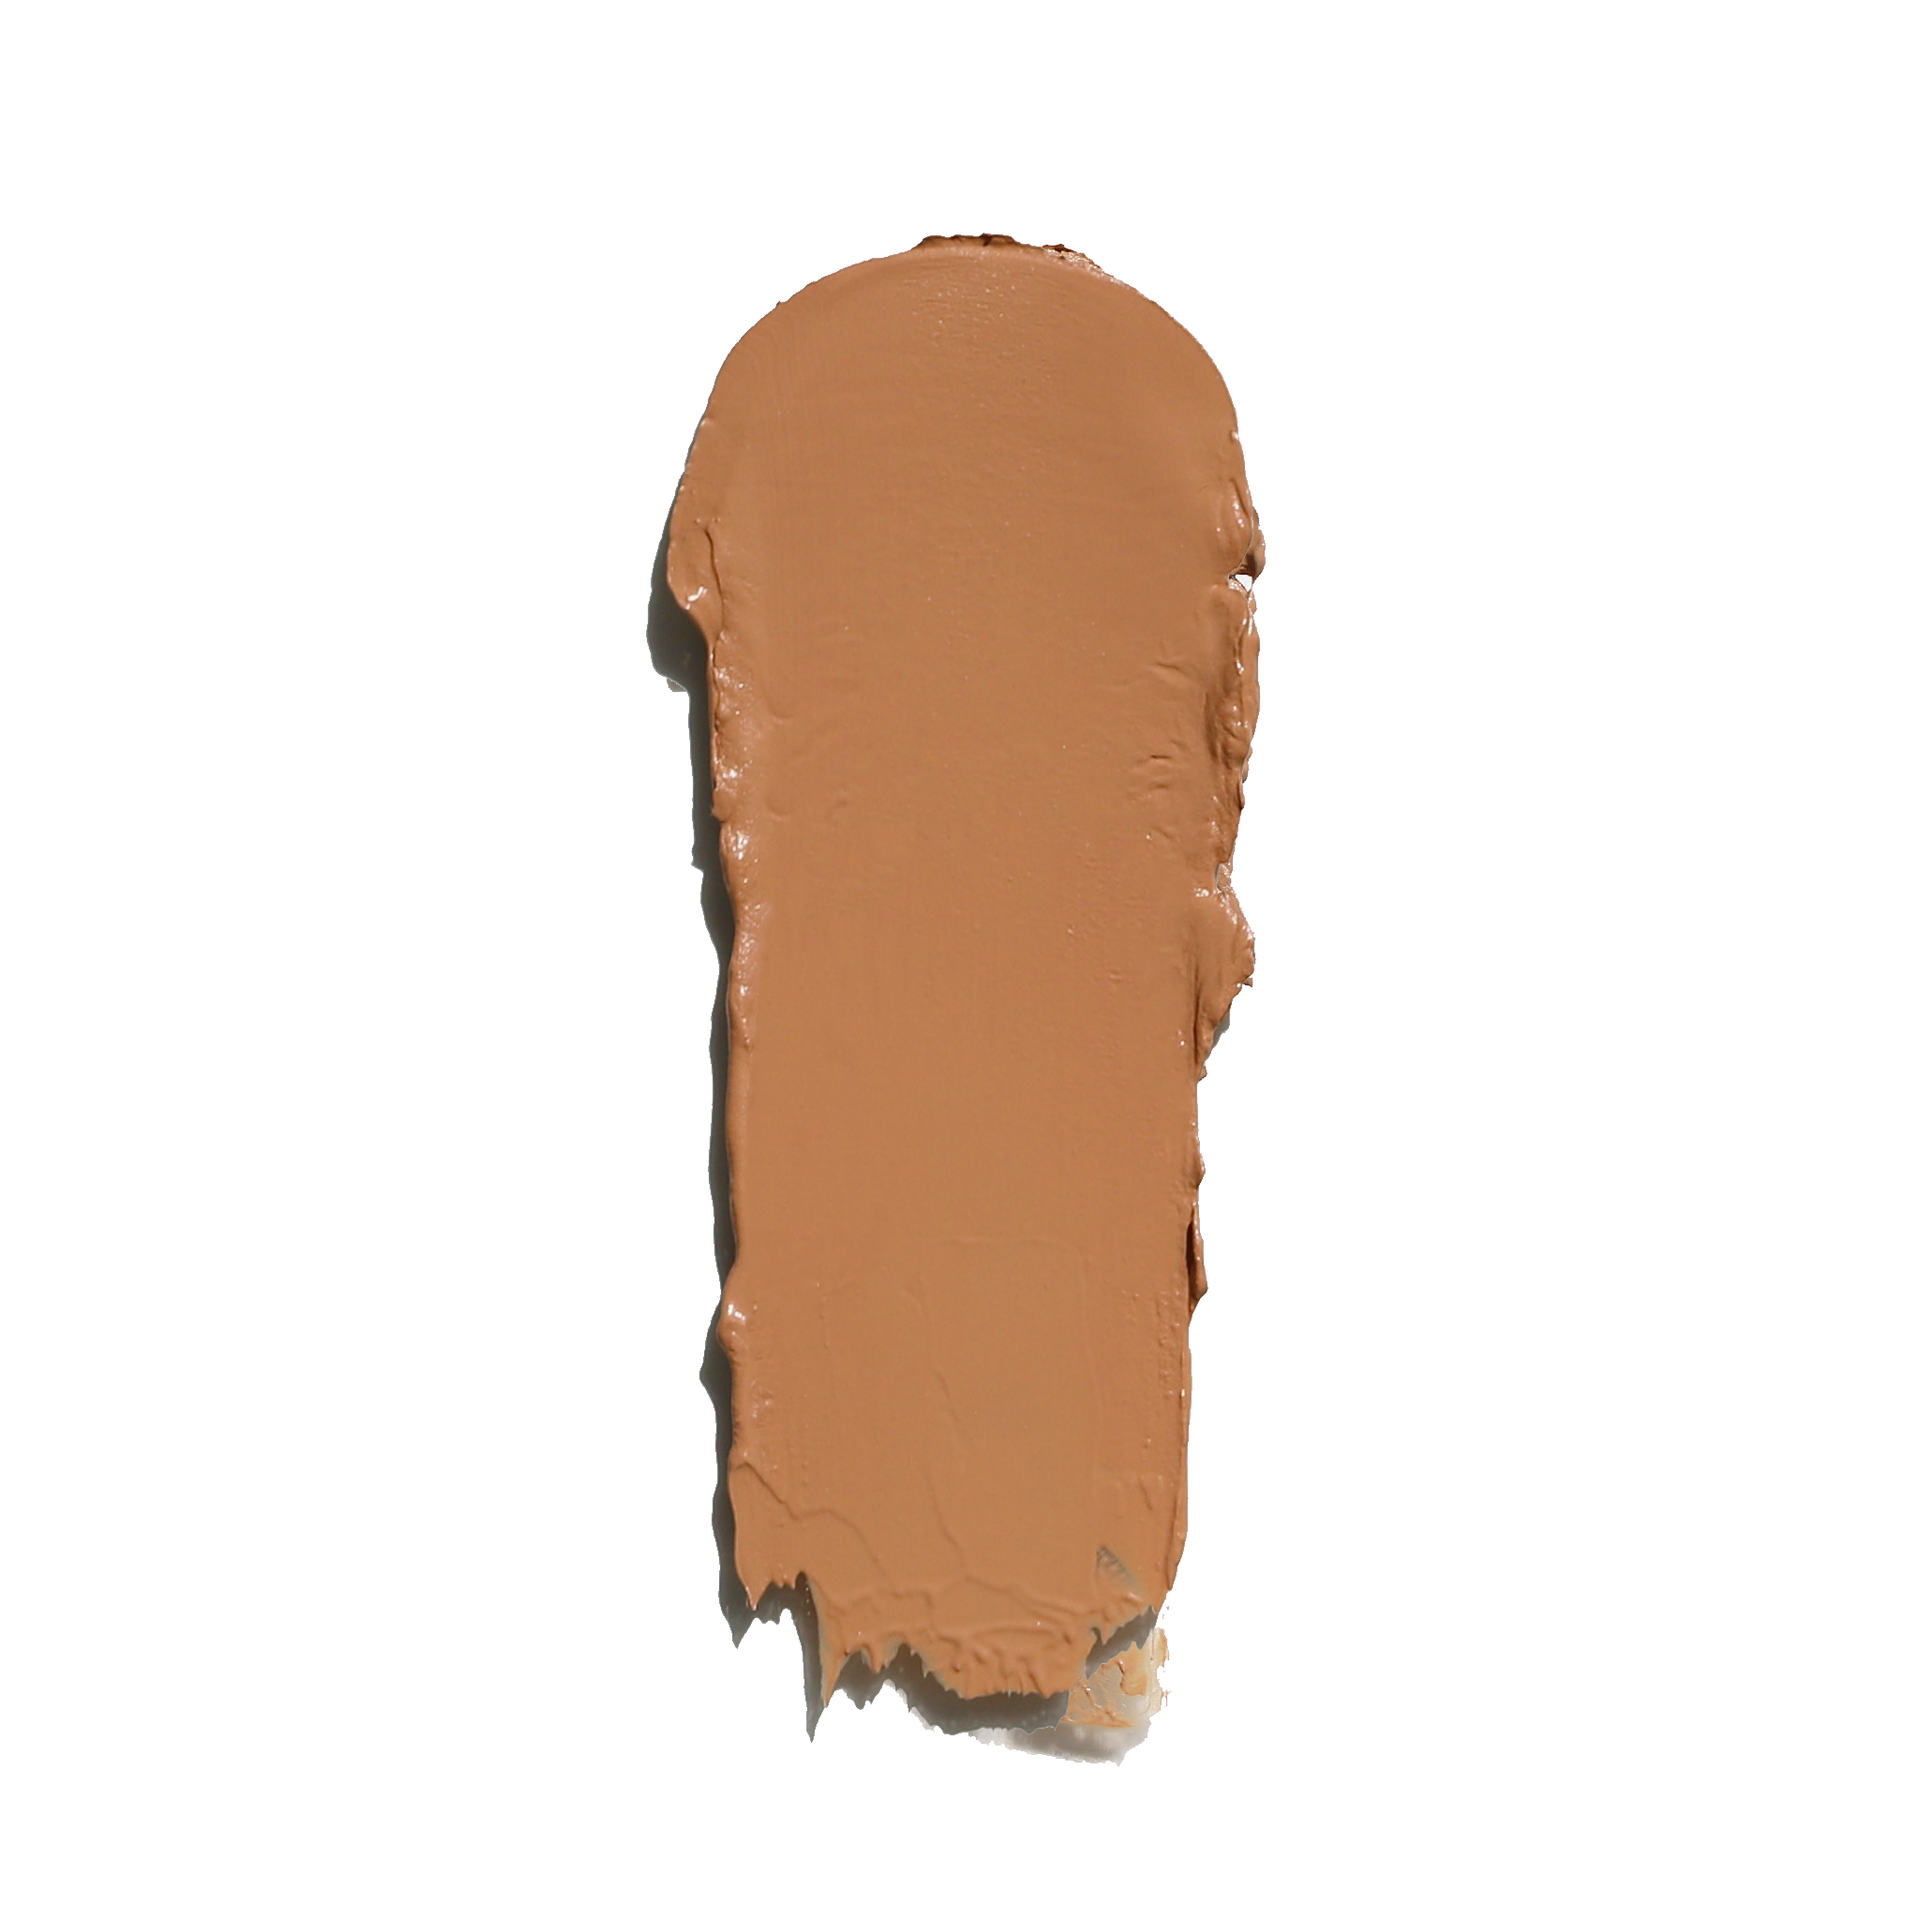 swatch of bronzer- candy paint cream bronzer - half caked makeup 